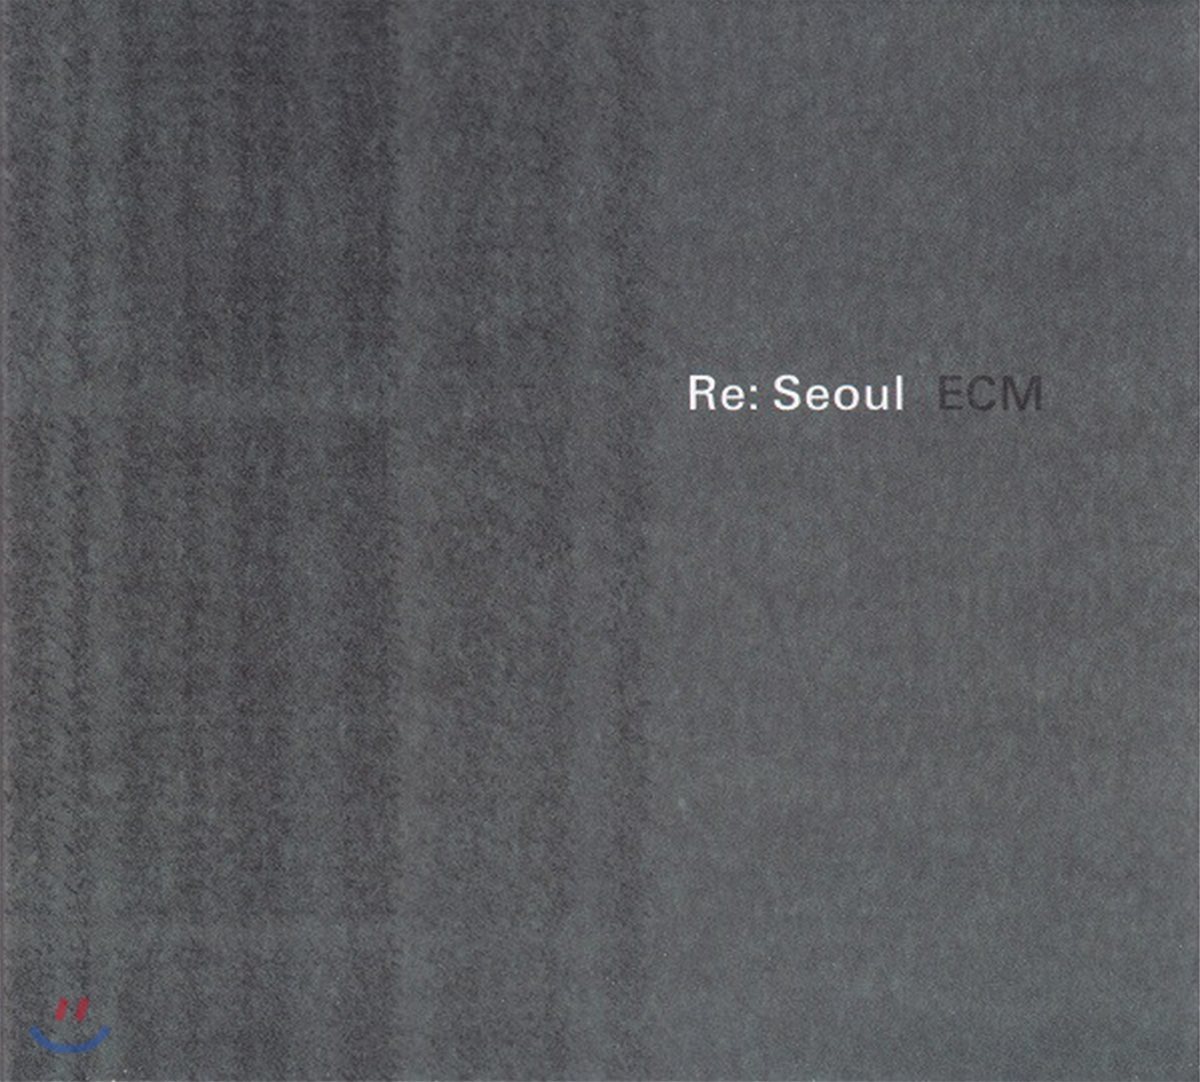 2013 ECM 샘플러 [서울] (2013 ECM Exhibition Special Sampler - Re: Seoul)